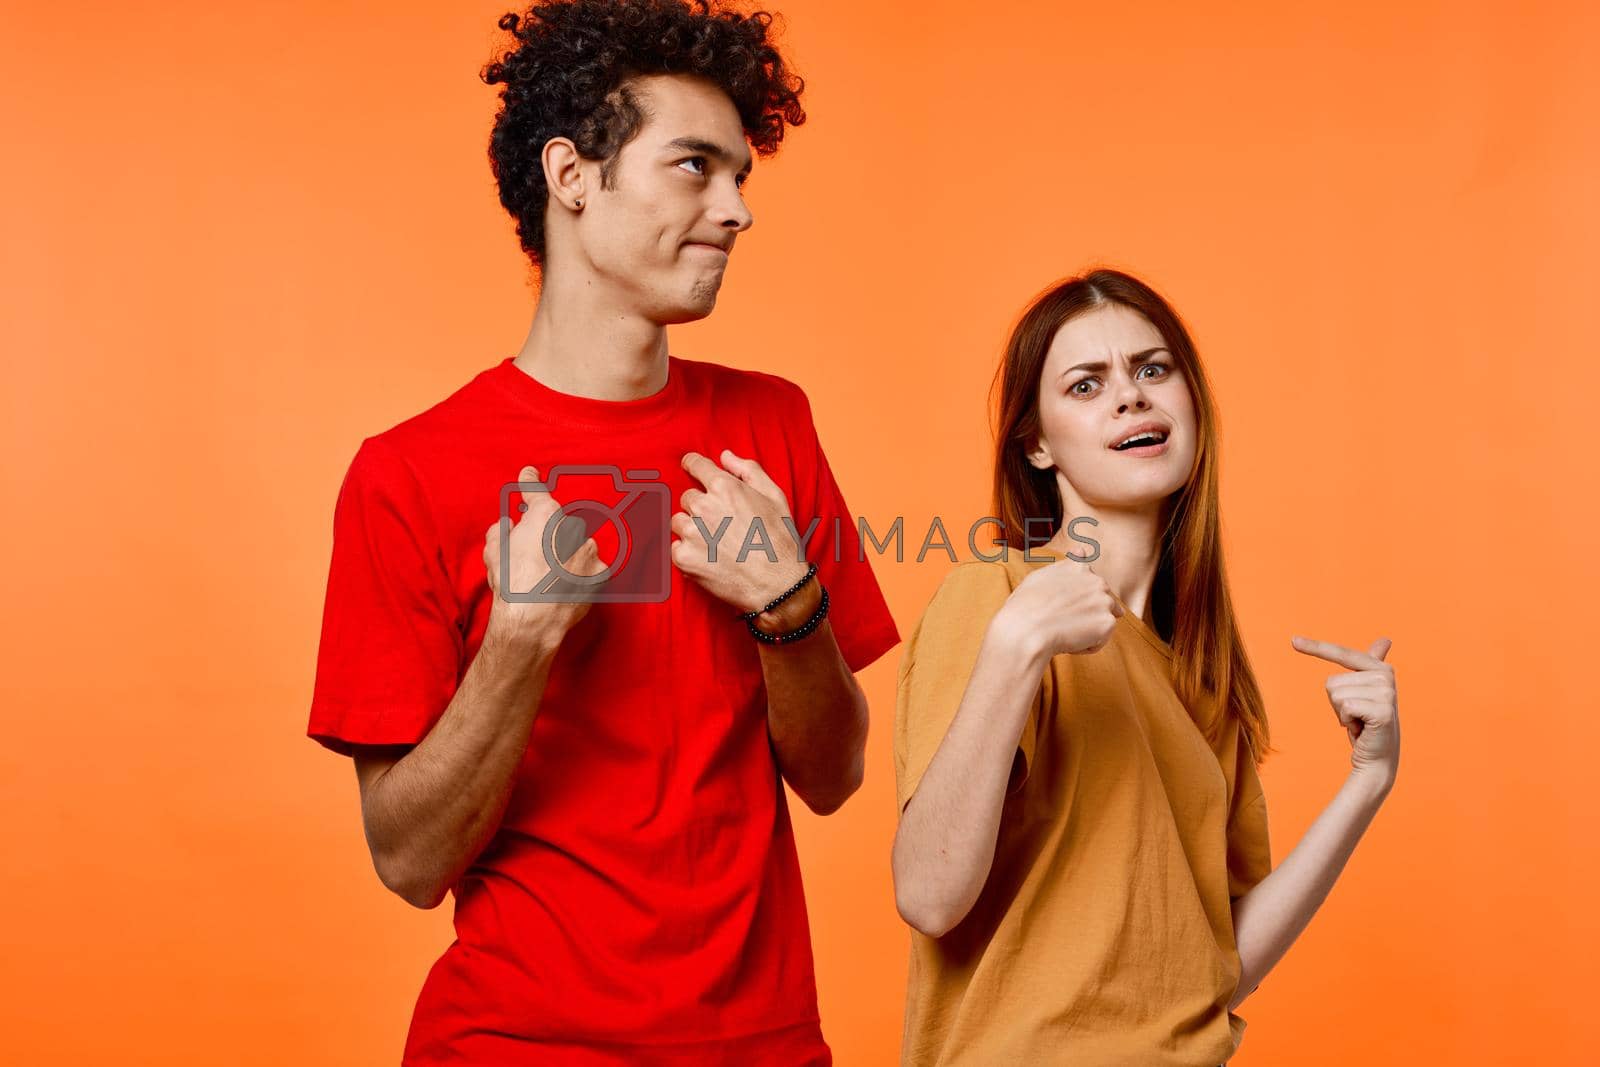 young couple fun friendship communication orange background fashion. High quality photo